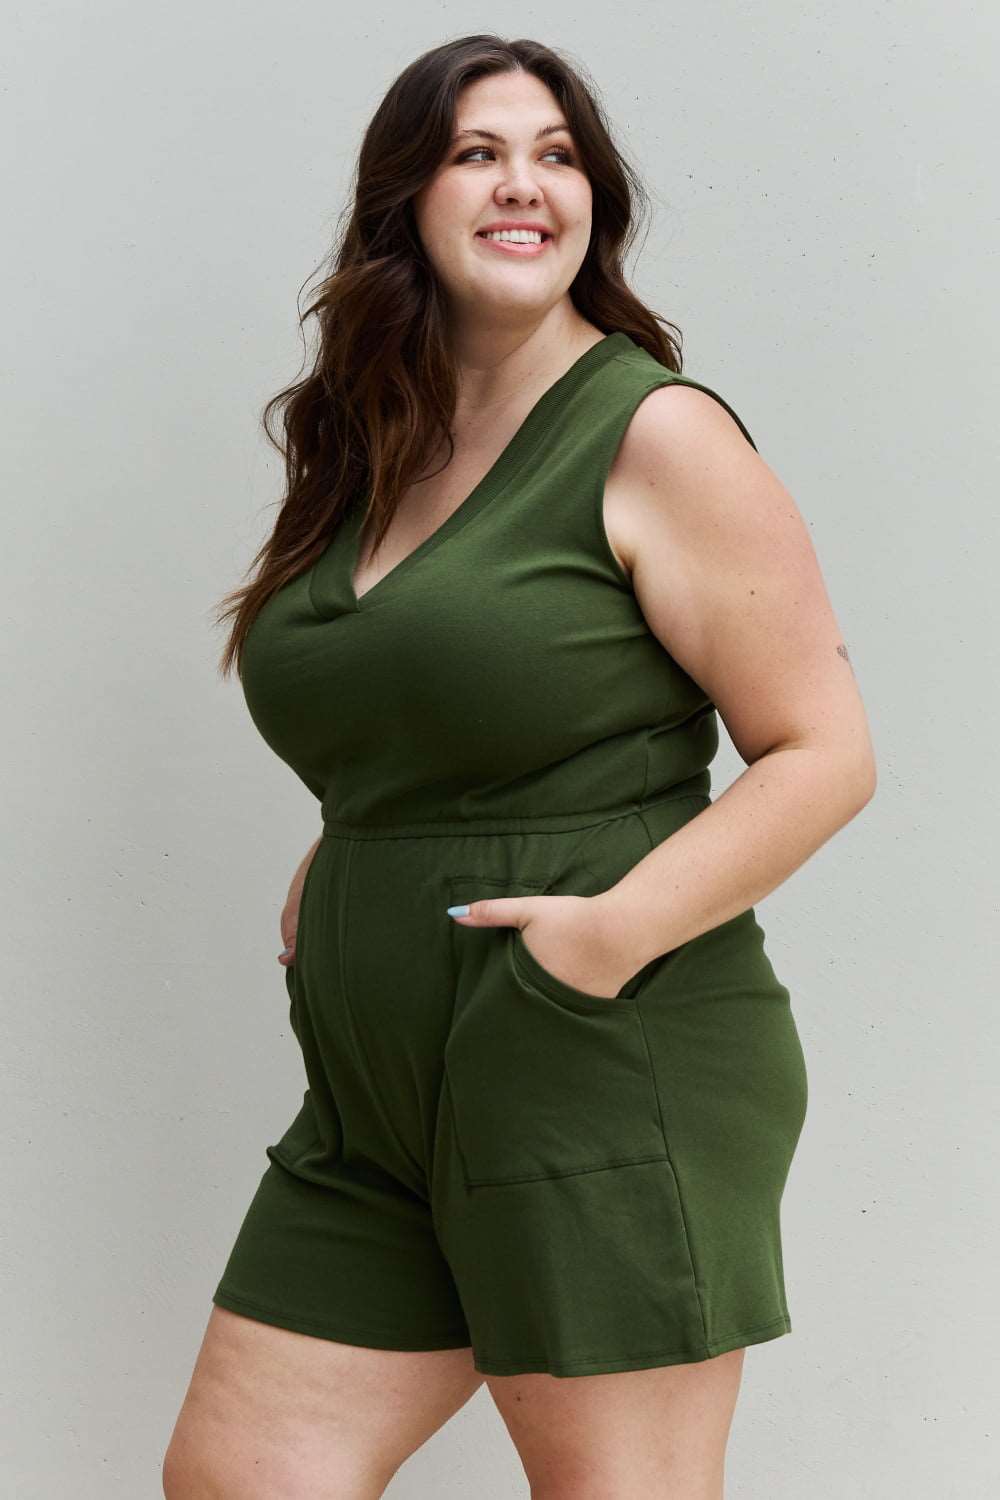 Zenana - Women's Plus Size Forever Yours V-Neck Sleeveless Romper in Army Green